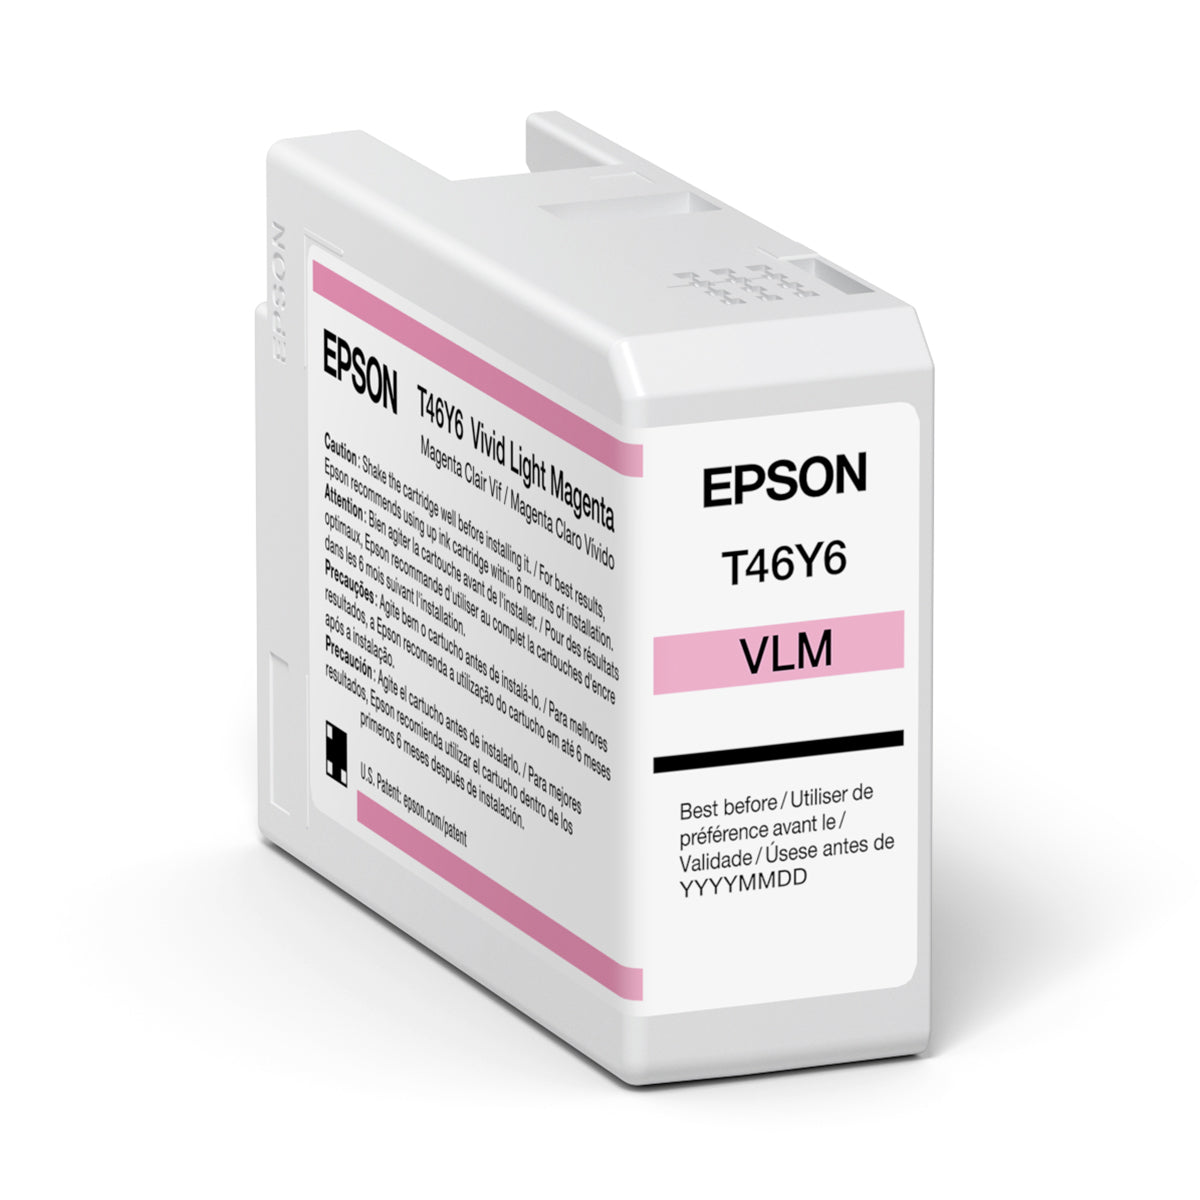 Epson T46Y600 P900 Ultrachrome HD Vivid Light Magenta Ink